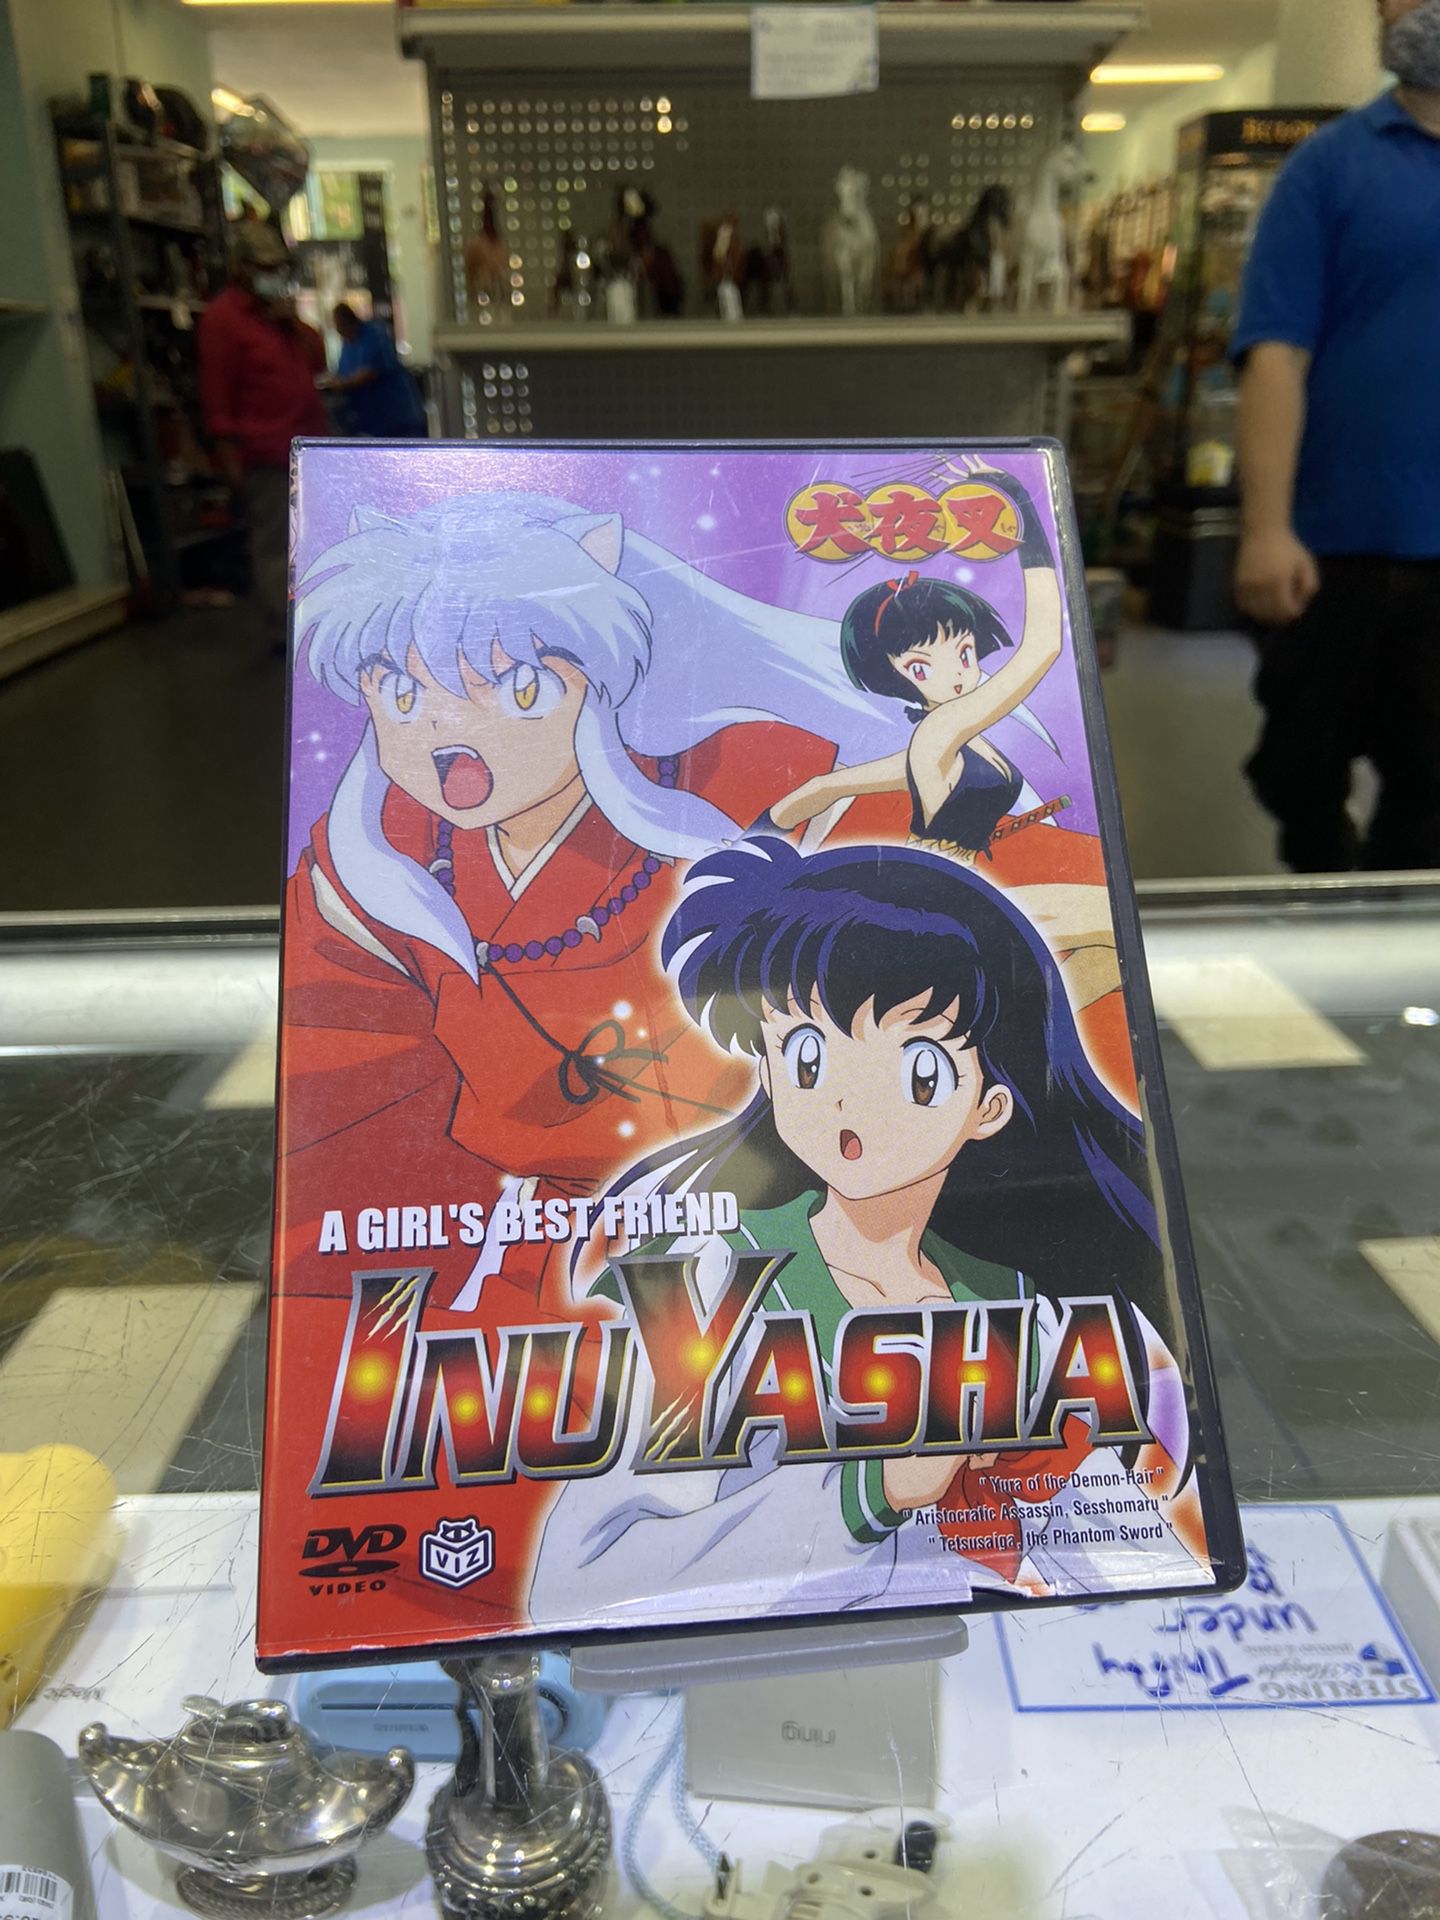 Inuyasha vol. 2 DVD